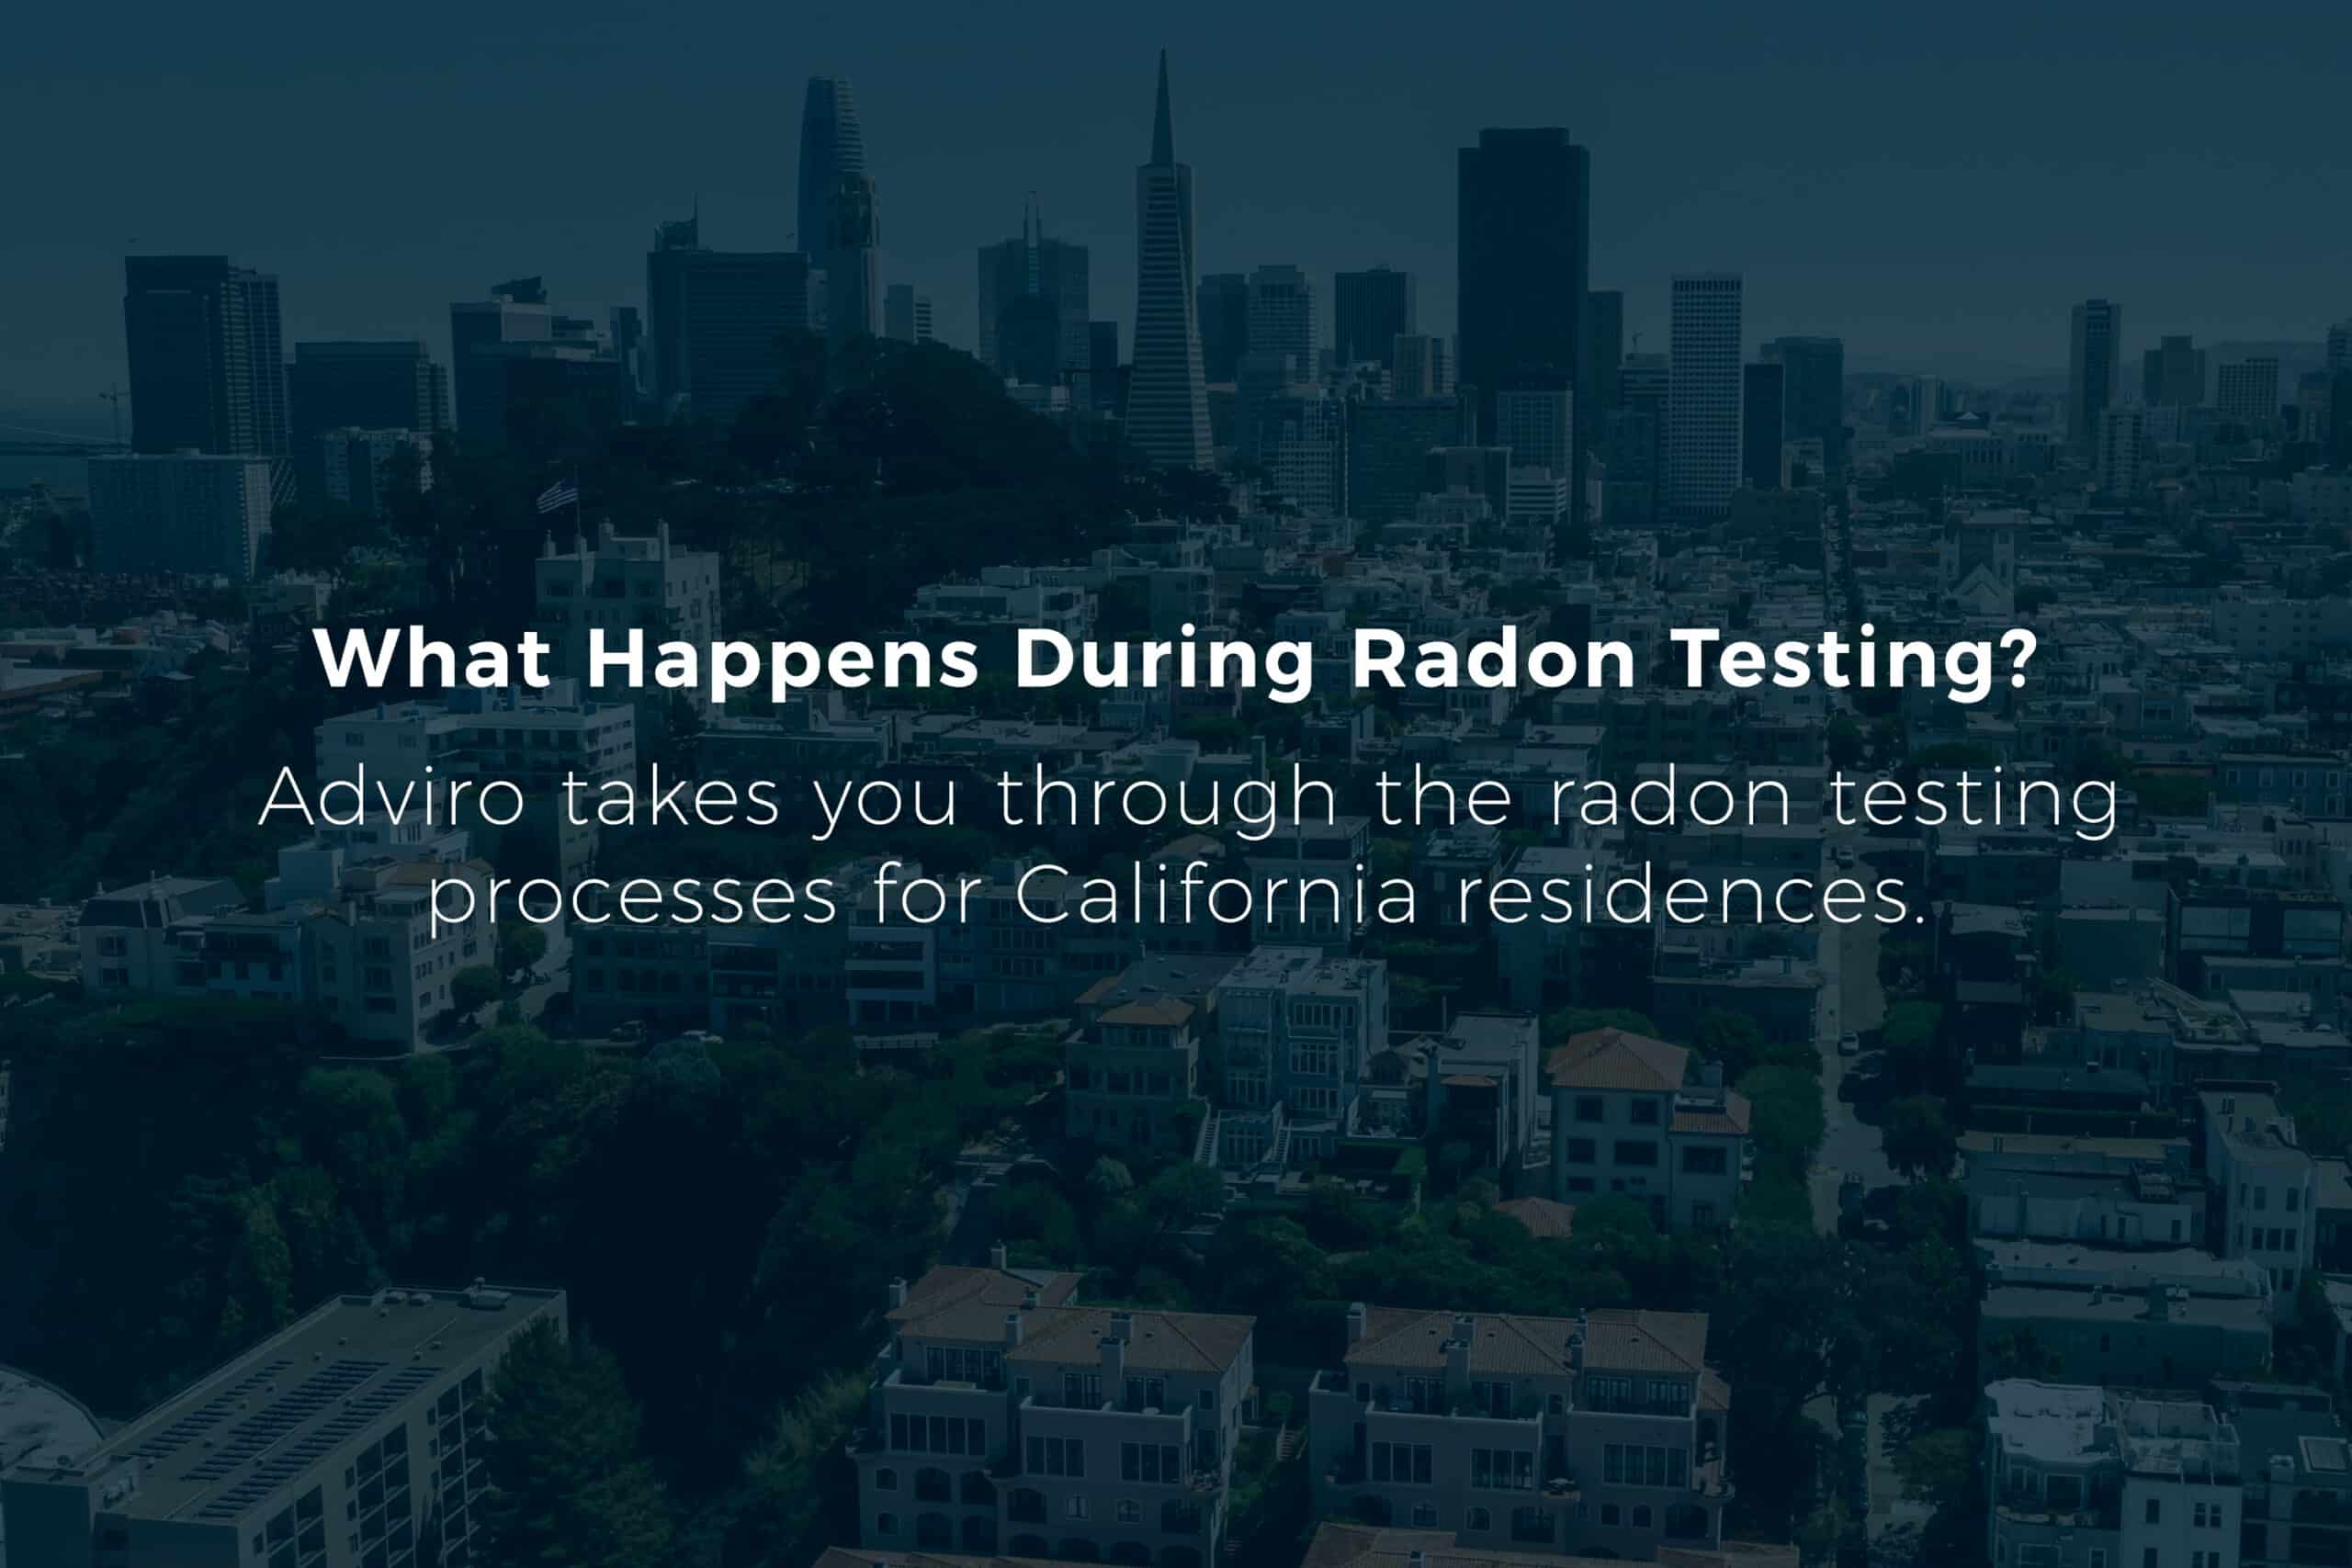 Headline that says "What Happens During Radon Testing? </p>
<p>Adviro takes you through the radon testing processes for California residences." on a blue background.